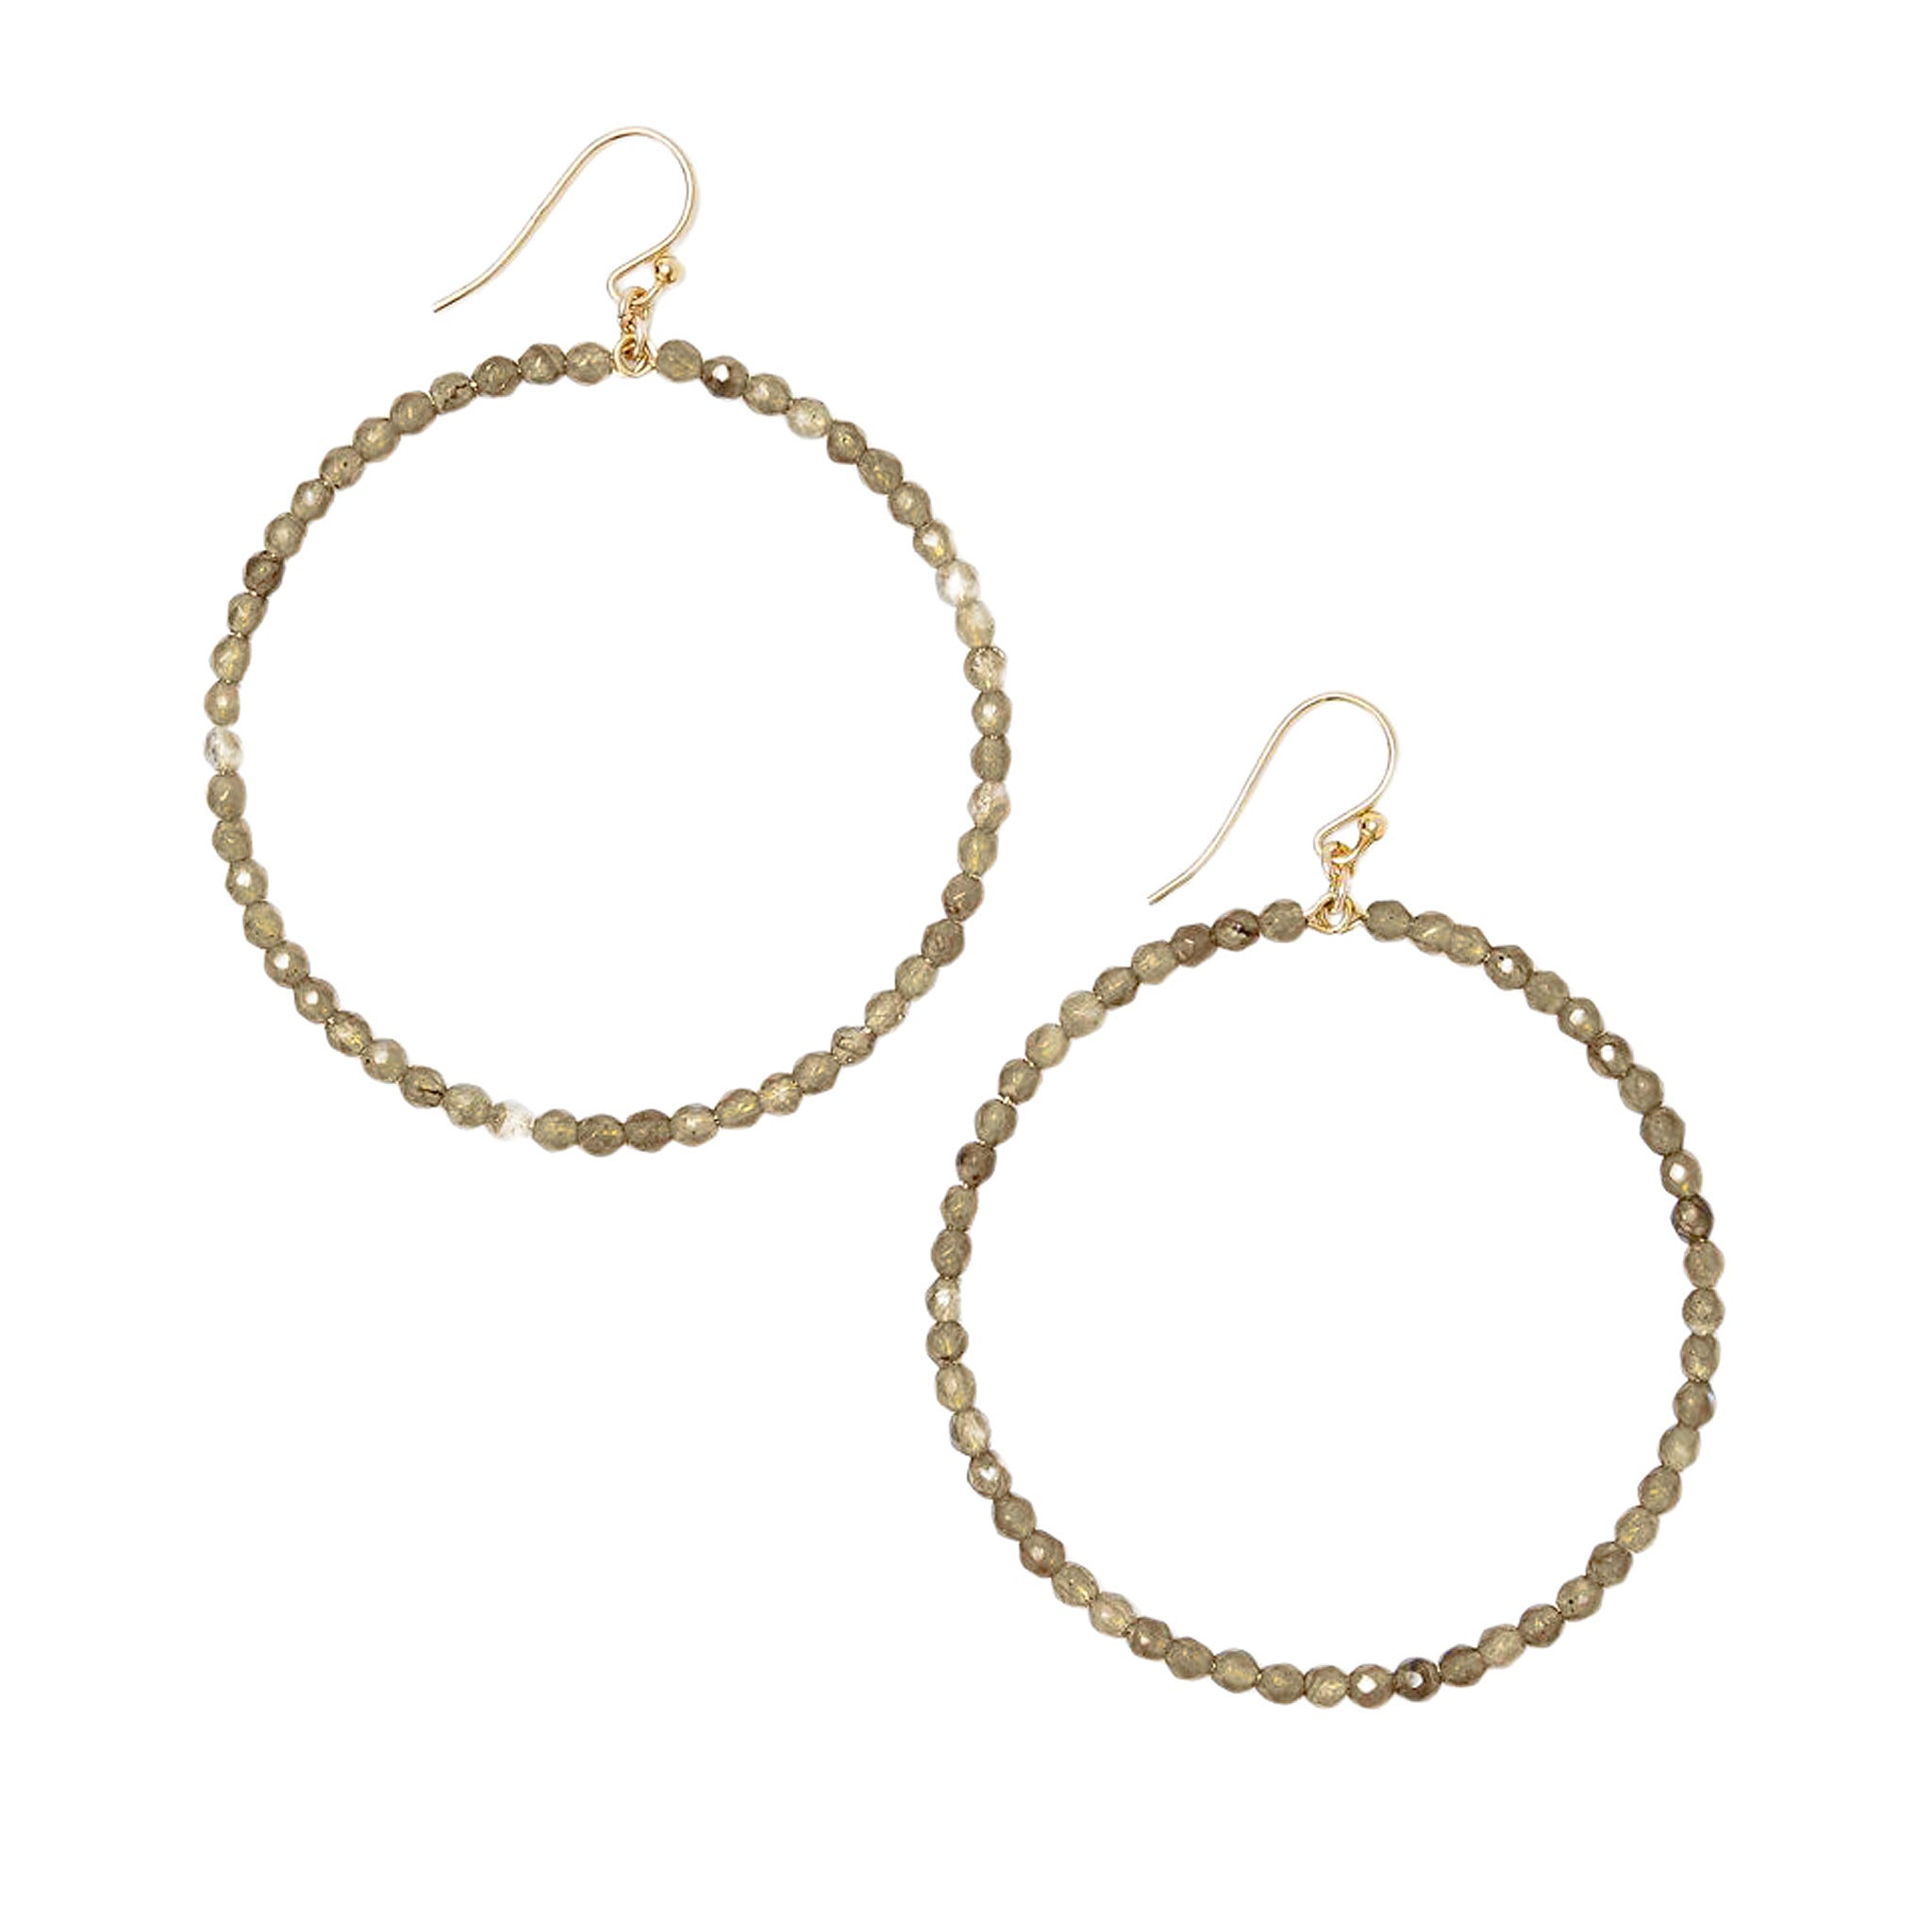 Chan Luu 2 Inch Gold Hoop Earrings in Labradorite